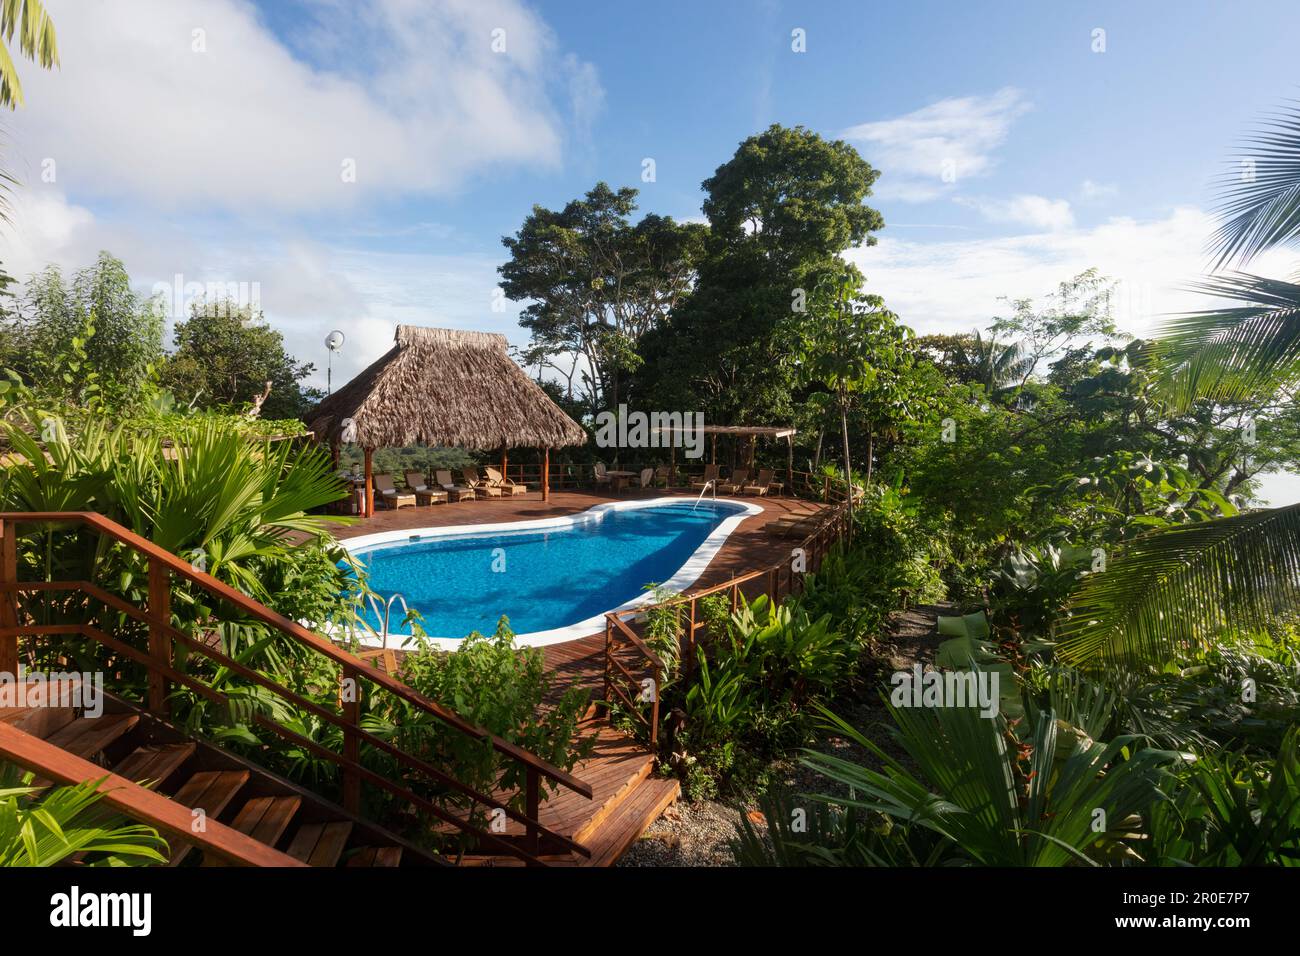 Der Pool in Lapas Rojas Eco Lodge, Halbinsel Osa, Costa Rica, Mittelamerika  Stockfotografie - Alamy